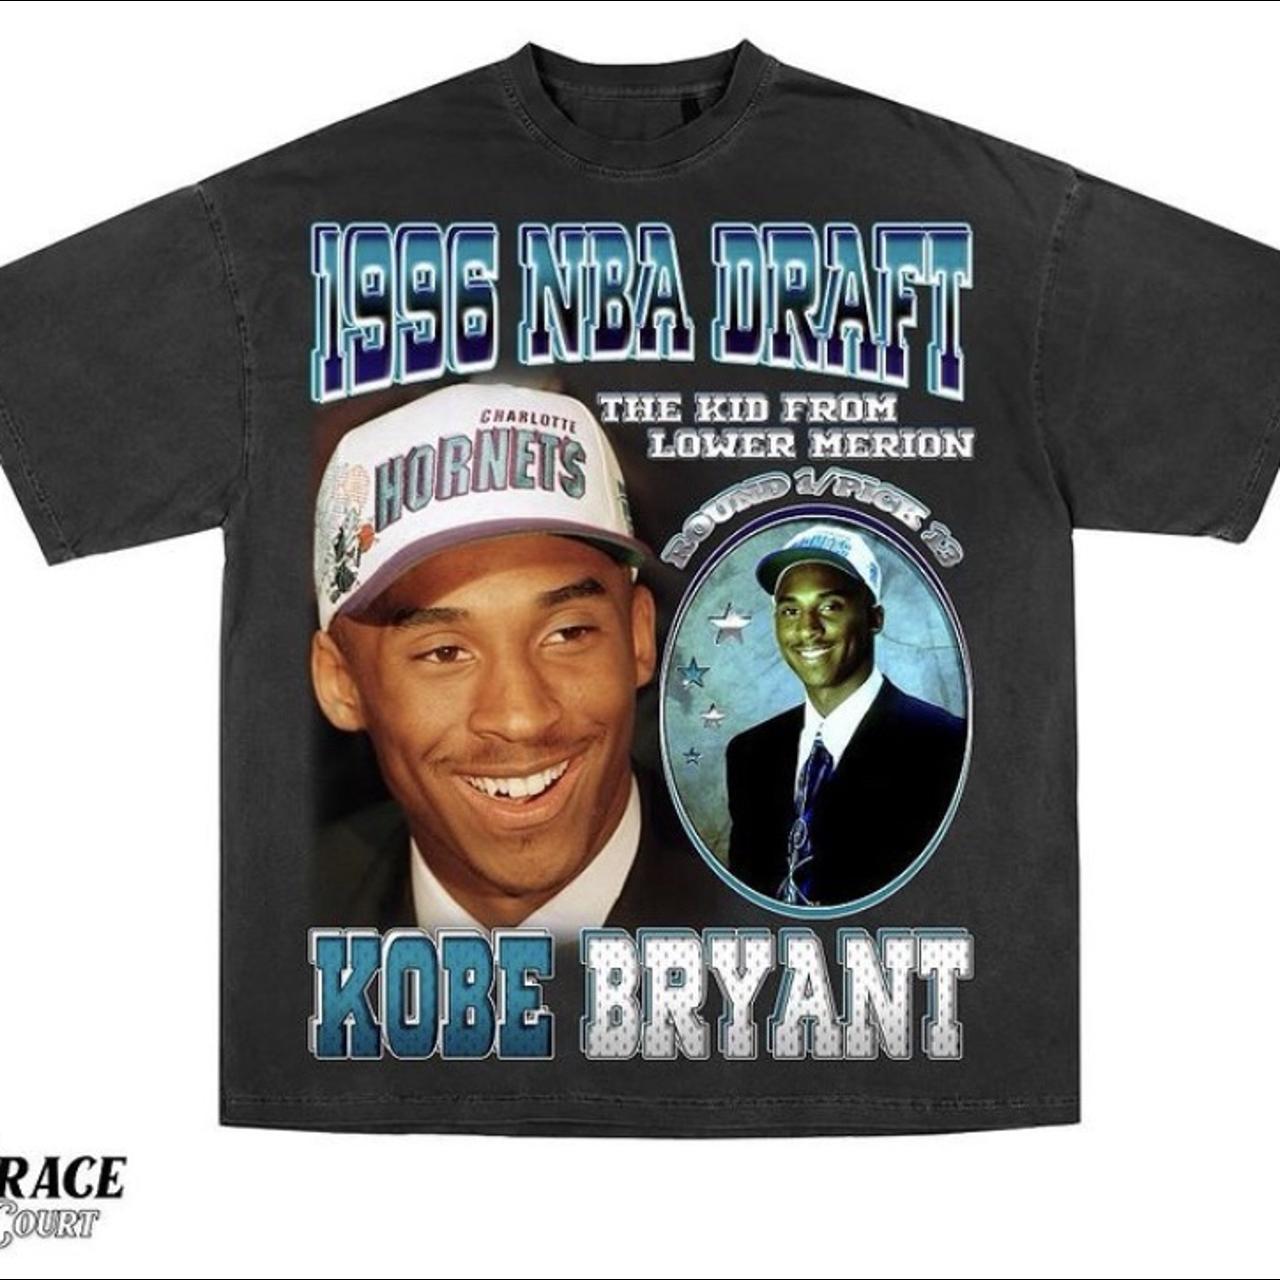 Limited Edition - Vintage Kobe Bryant '96 Draft - Depop